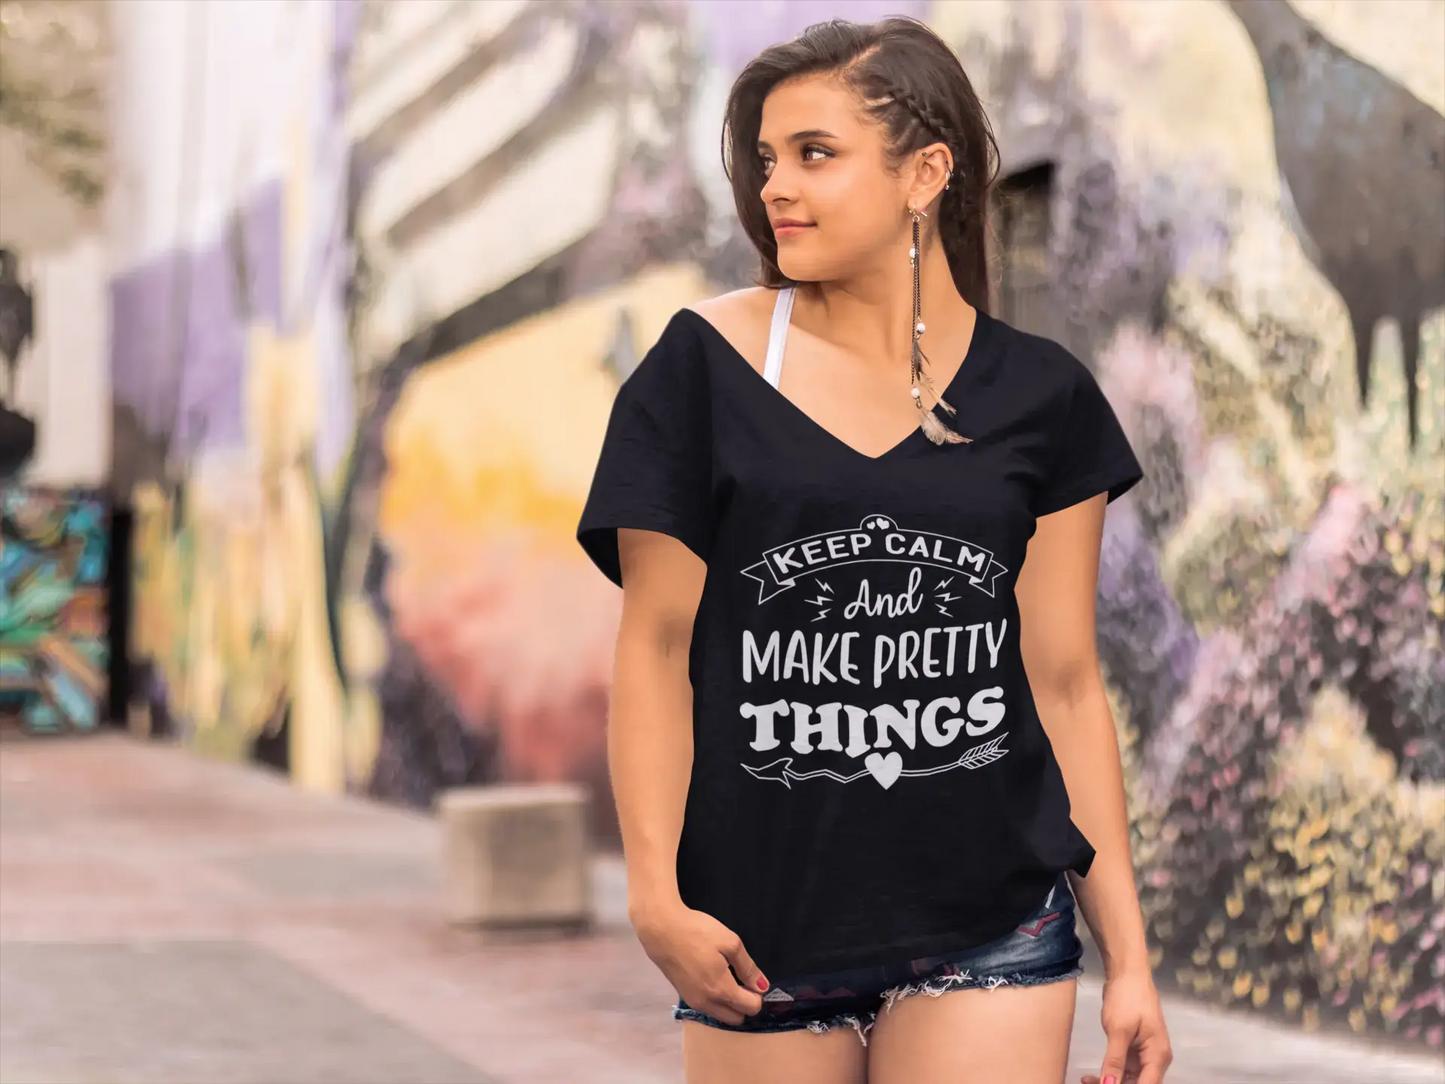 ULTRABASIC Women's T-Shirt Keep Calm and Make Pretty Things - Short Sleeve Tee Shirt Tops